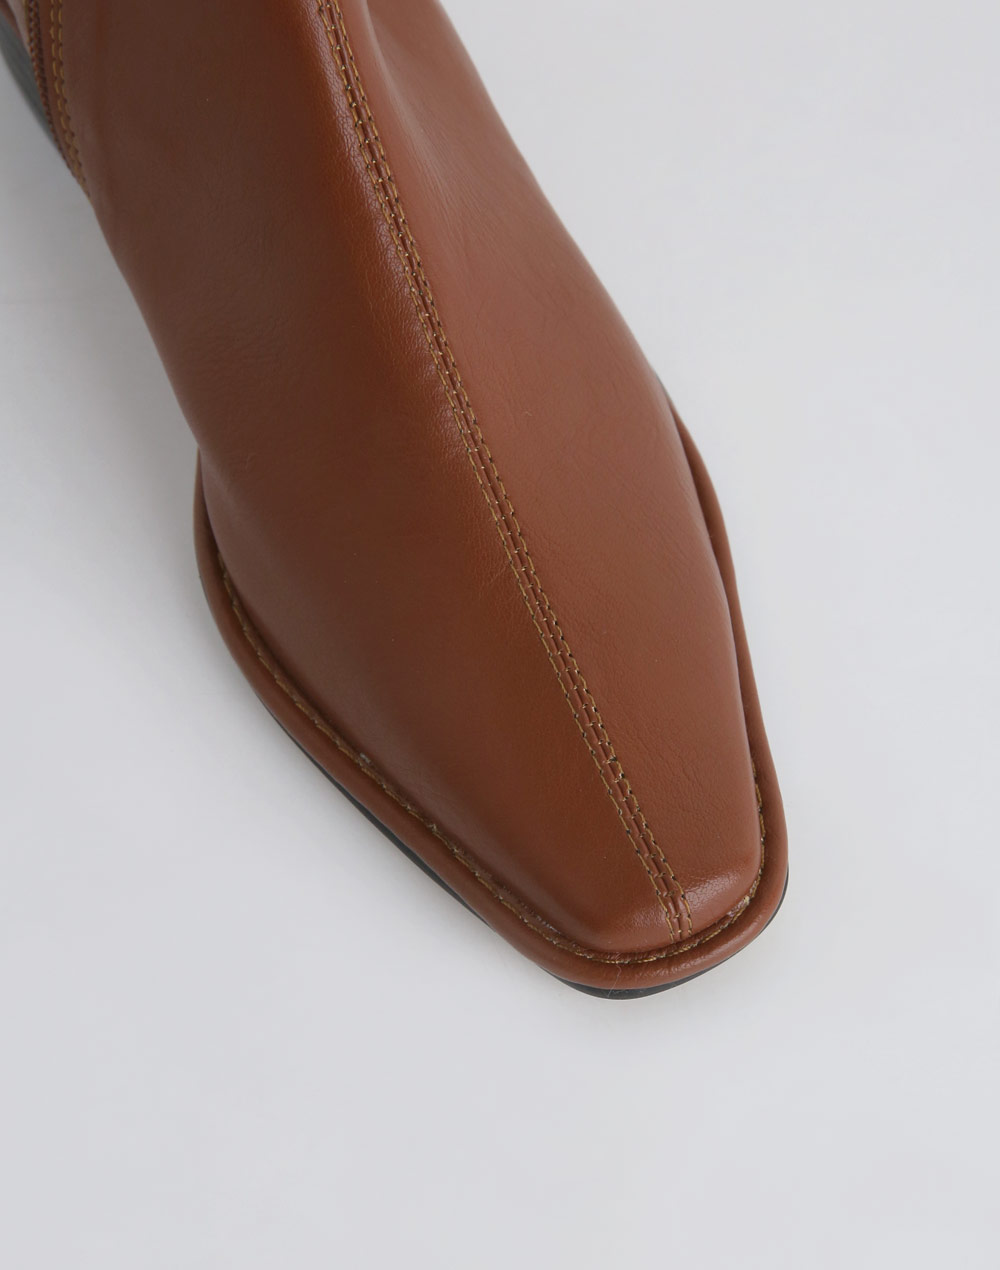 low heal half boots・s275844（シューズ/ブーツ）| futa_sakaguchi | 東京ガールズマーケット